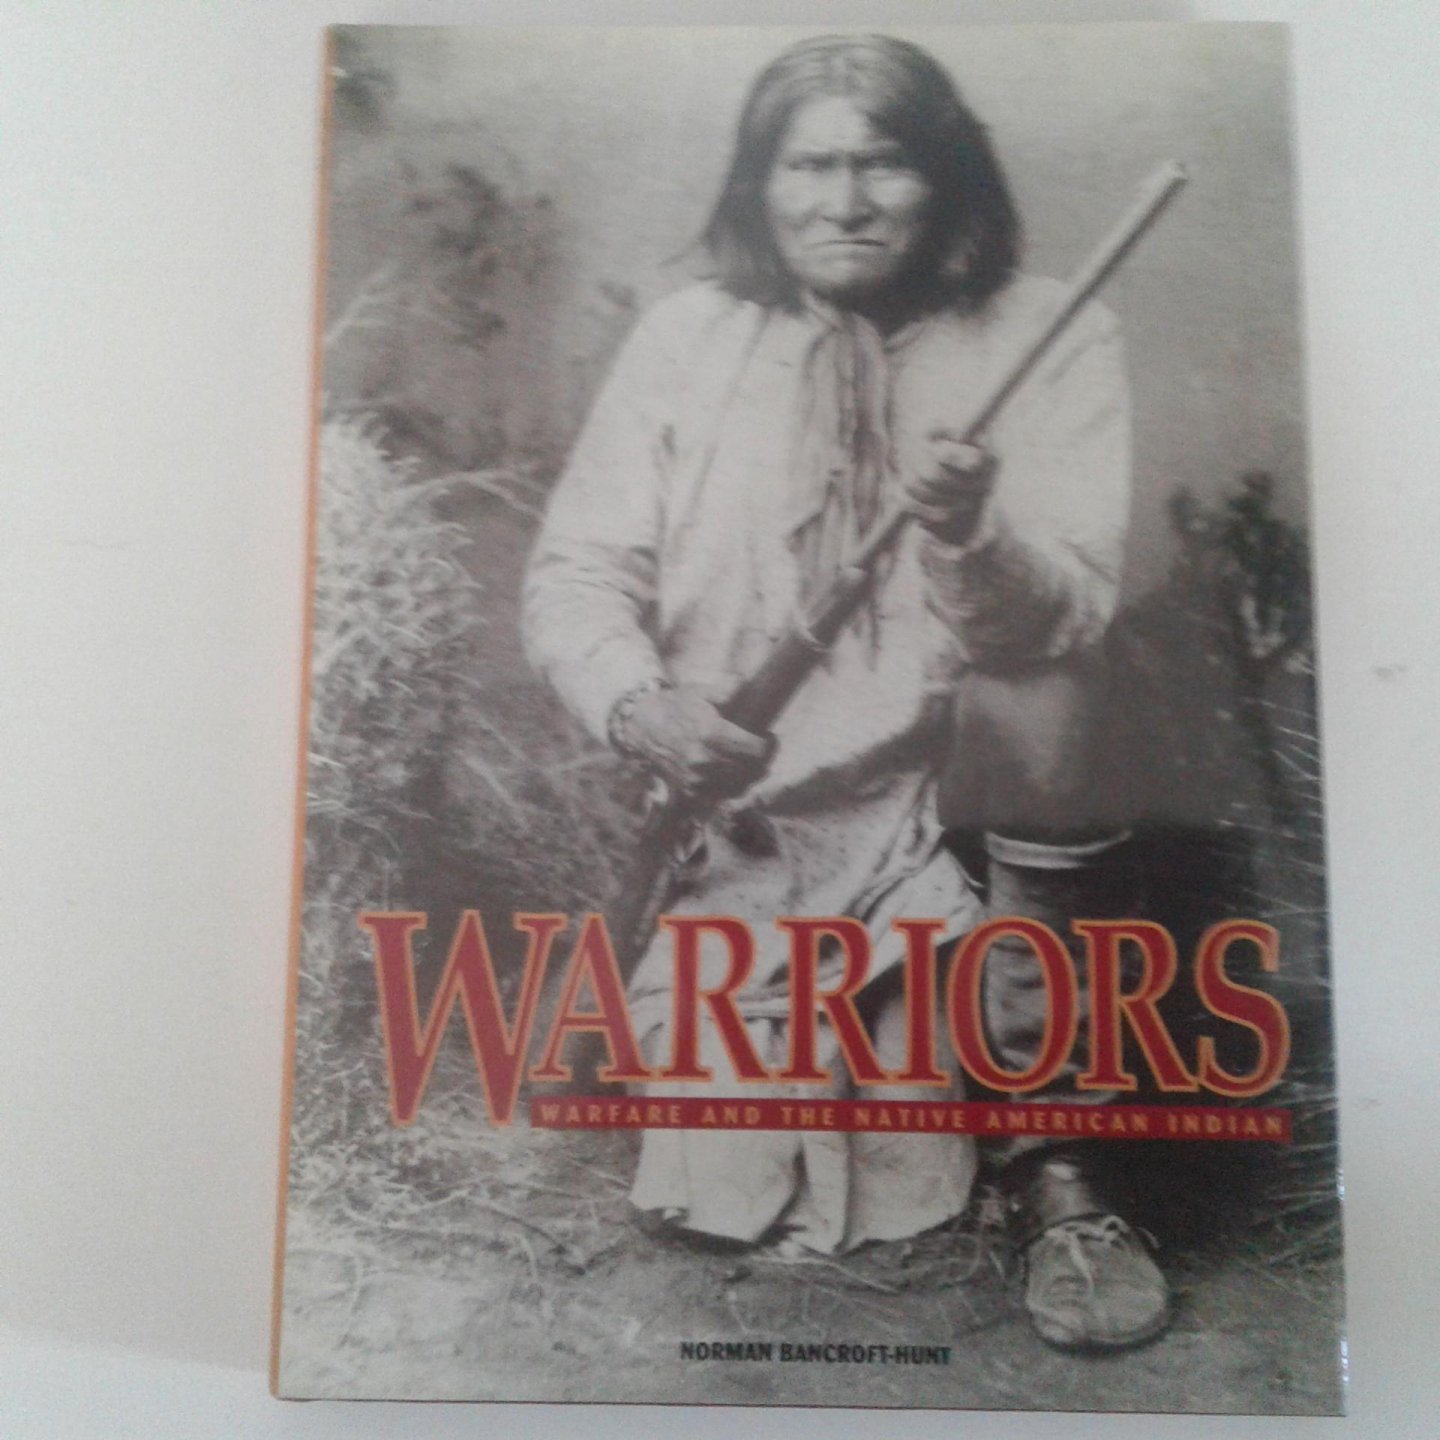 Bancroft-Hunt, Norman - Warriors ; Warfare and the Native American Indian